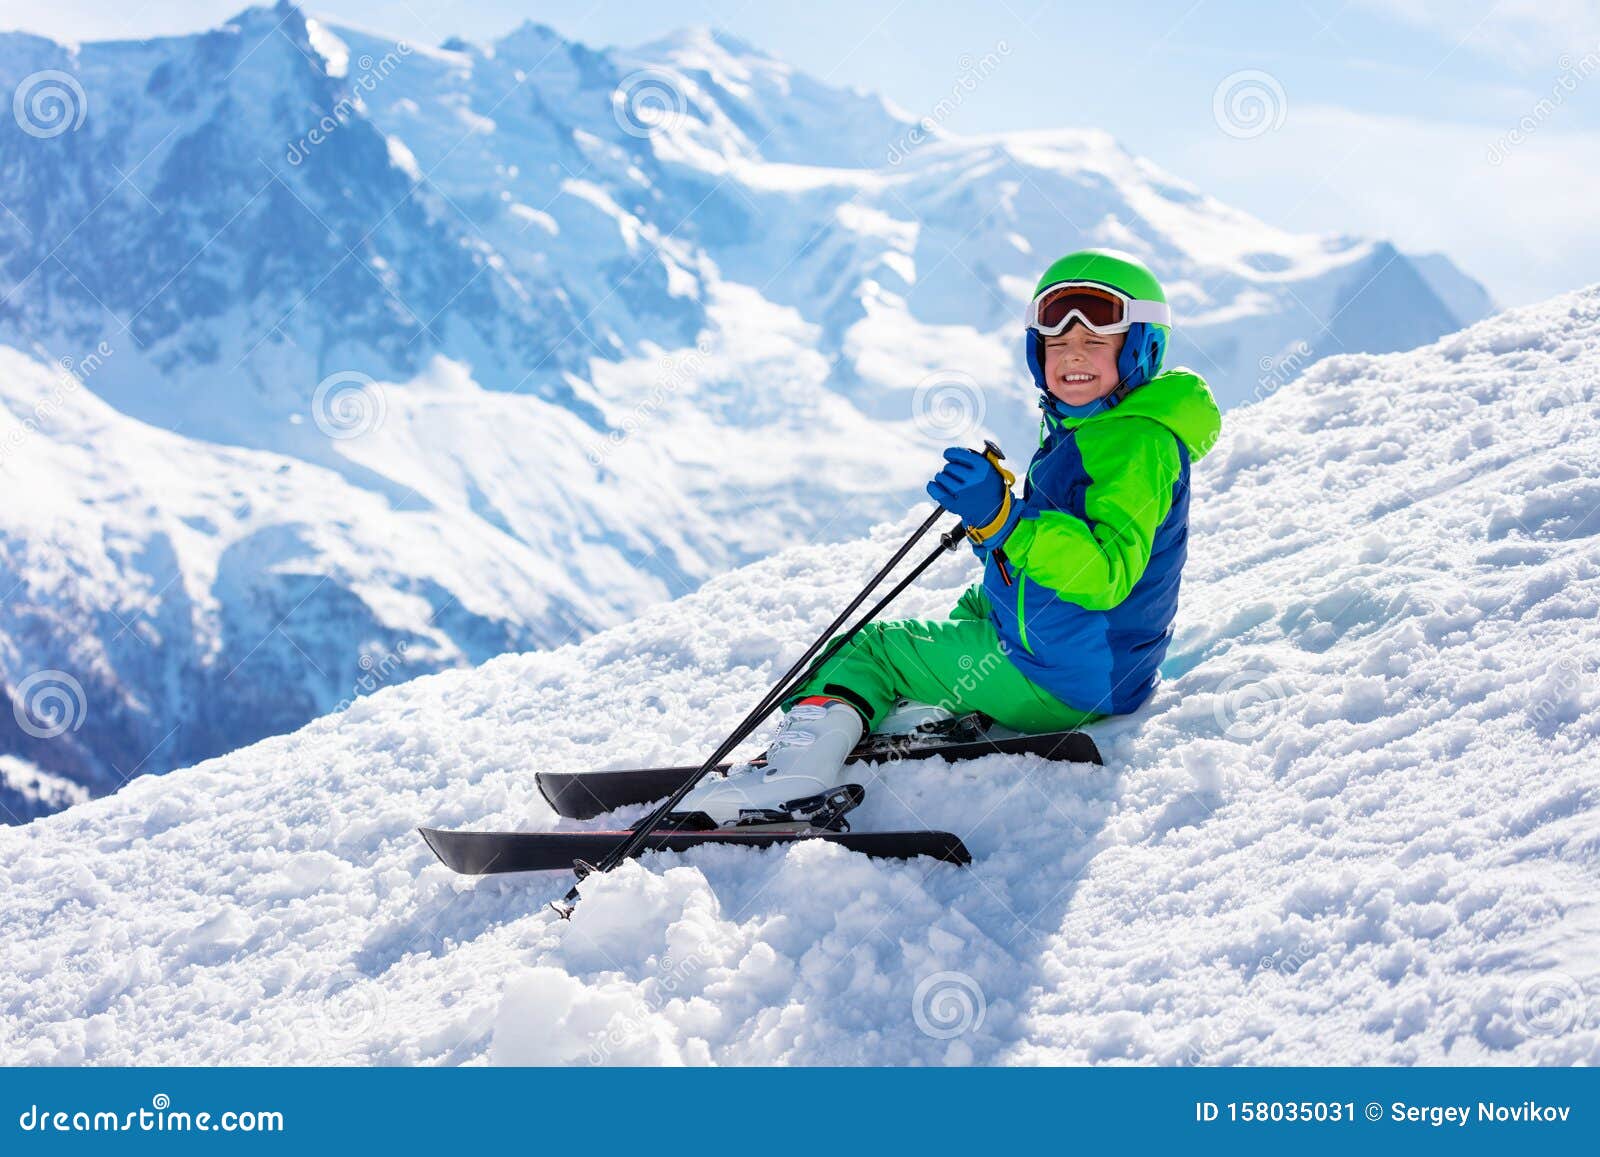 Ski Boy Sit on Snow with Mountain Peak Background Stock Image - Image ...